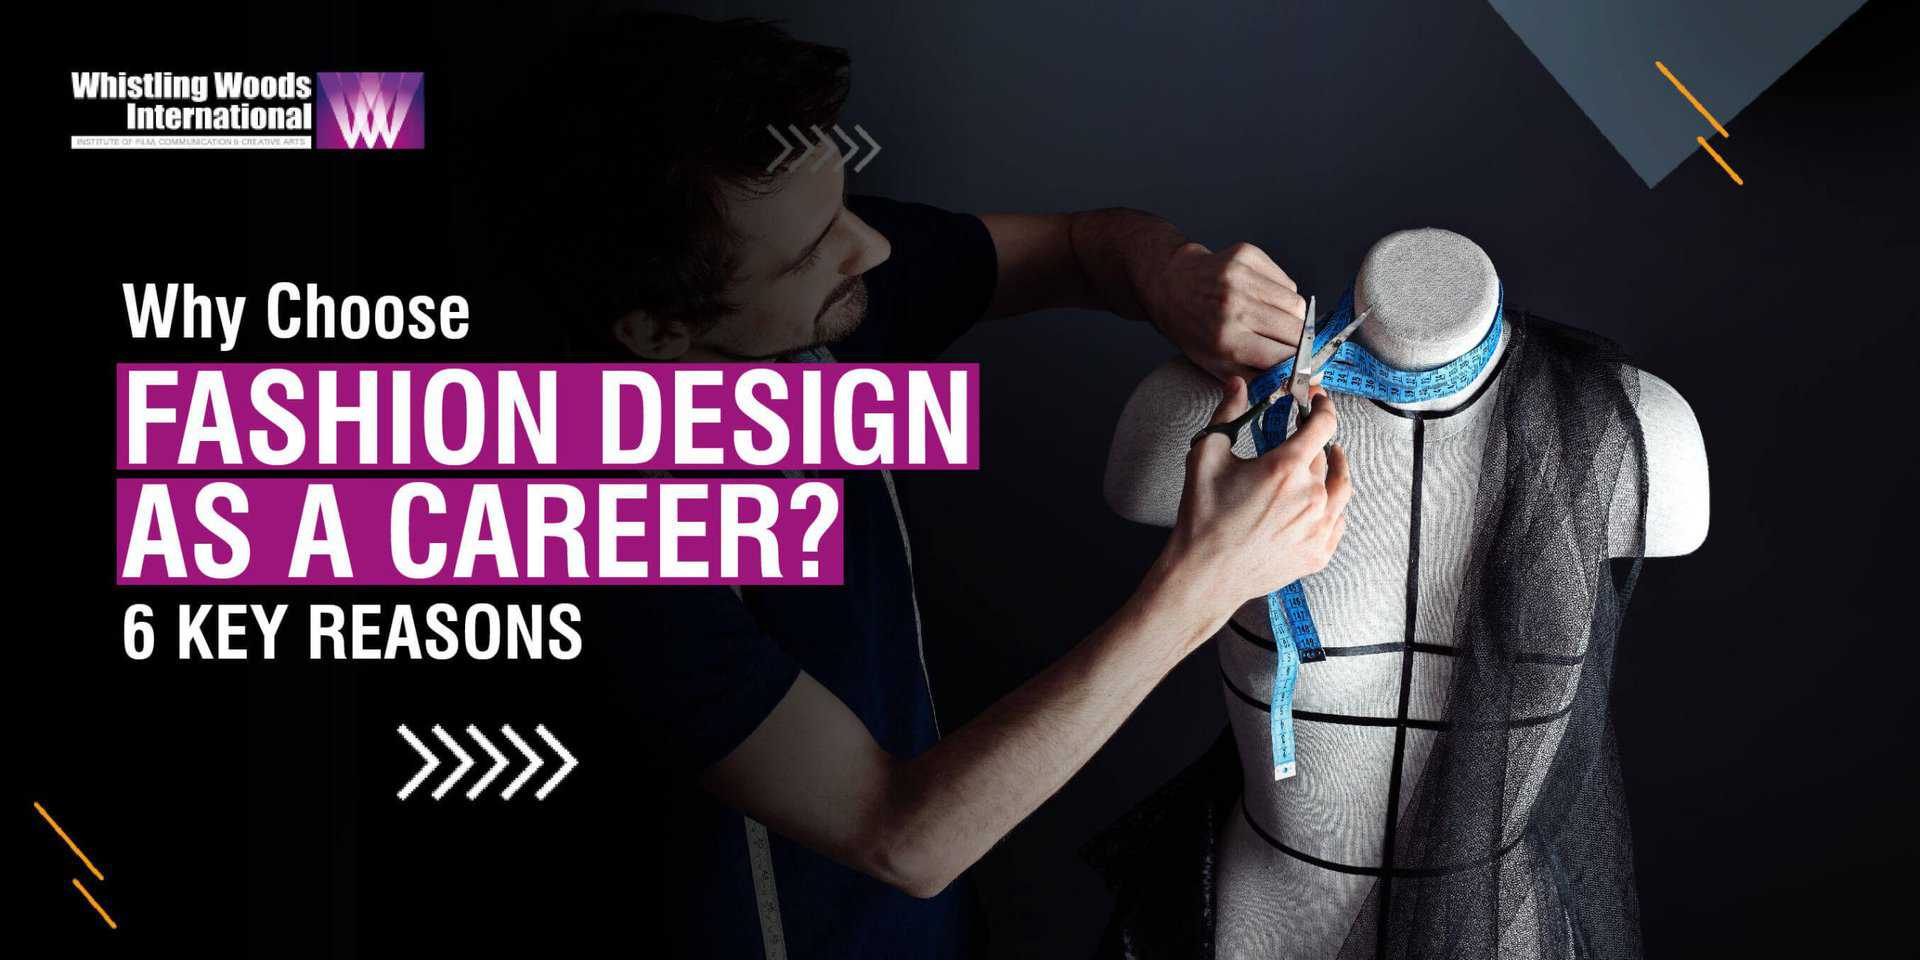 Why Choose Fashion Design as a Career? 6 Key Reasons - WWI